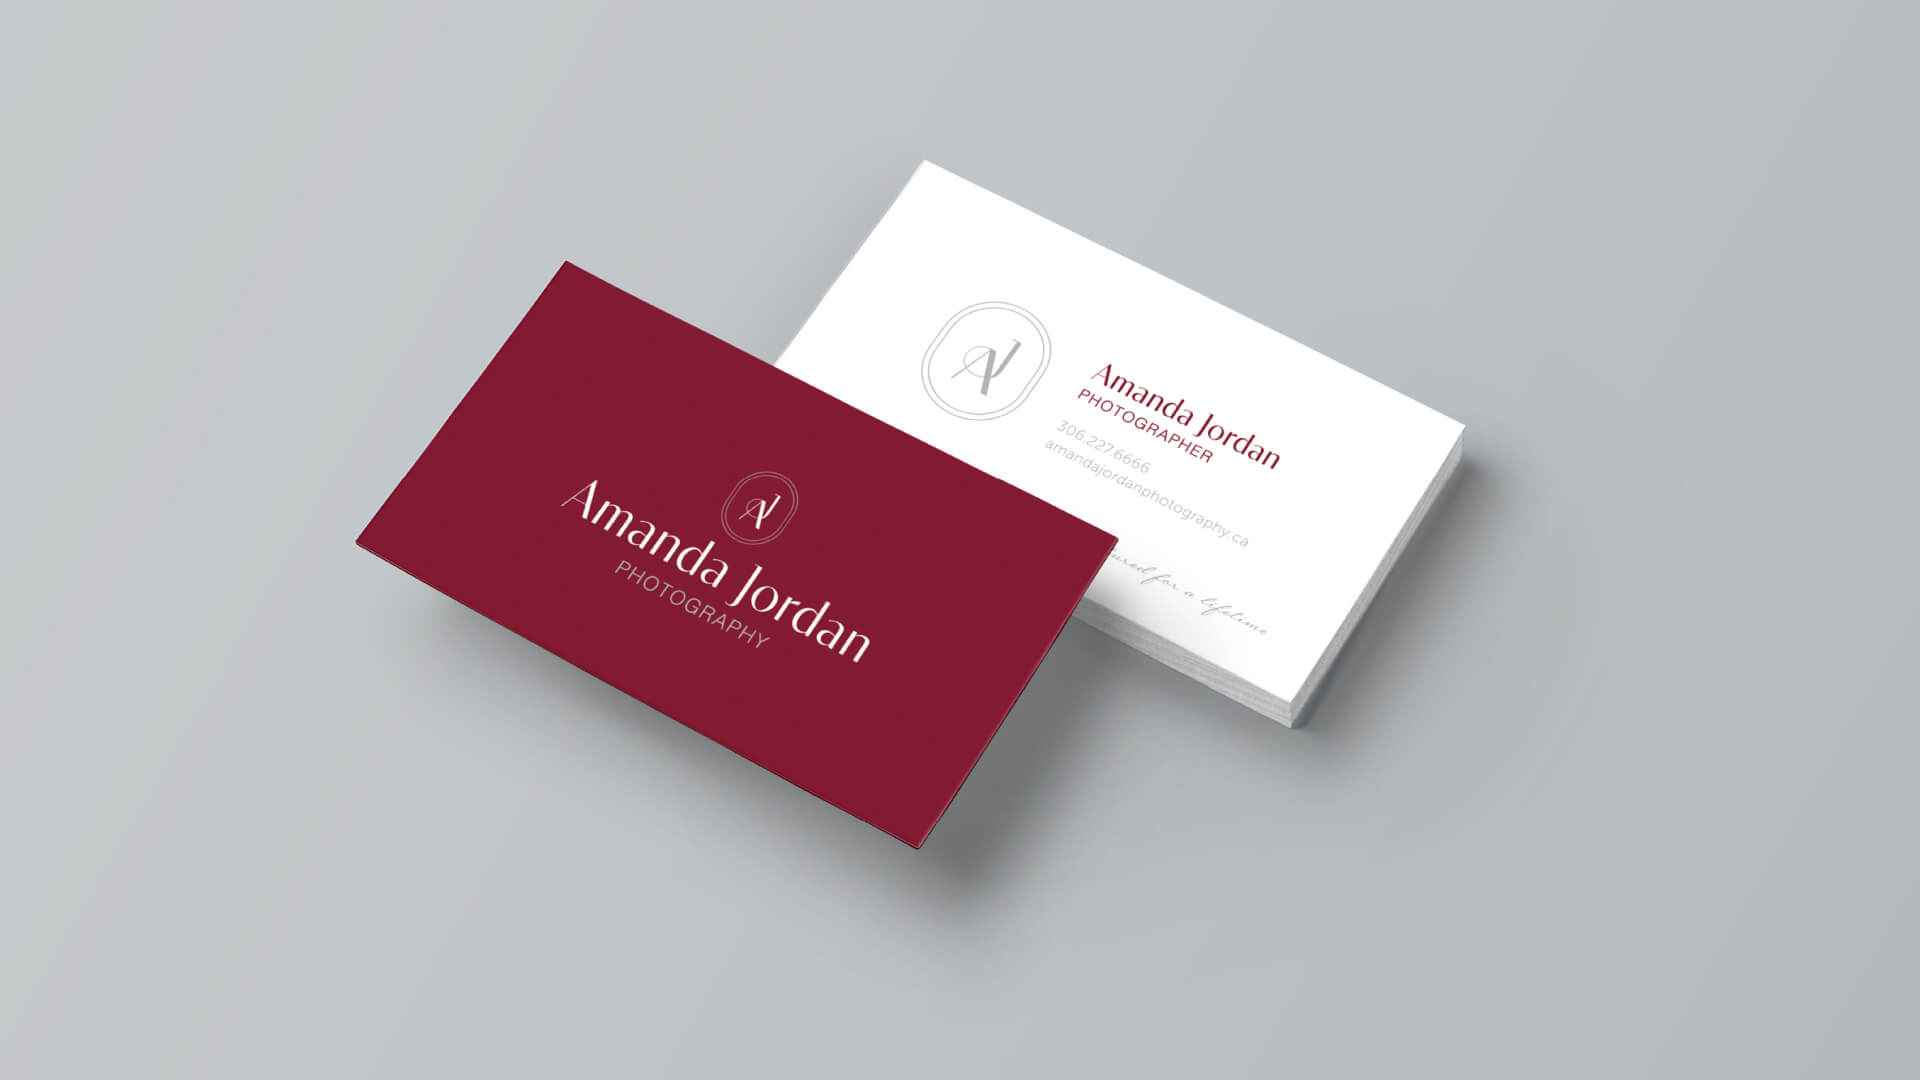 Amanda-jordan-Business-cards